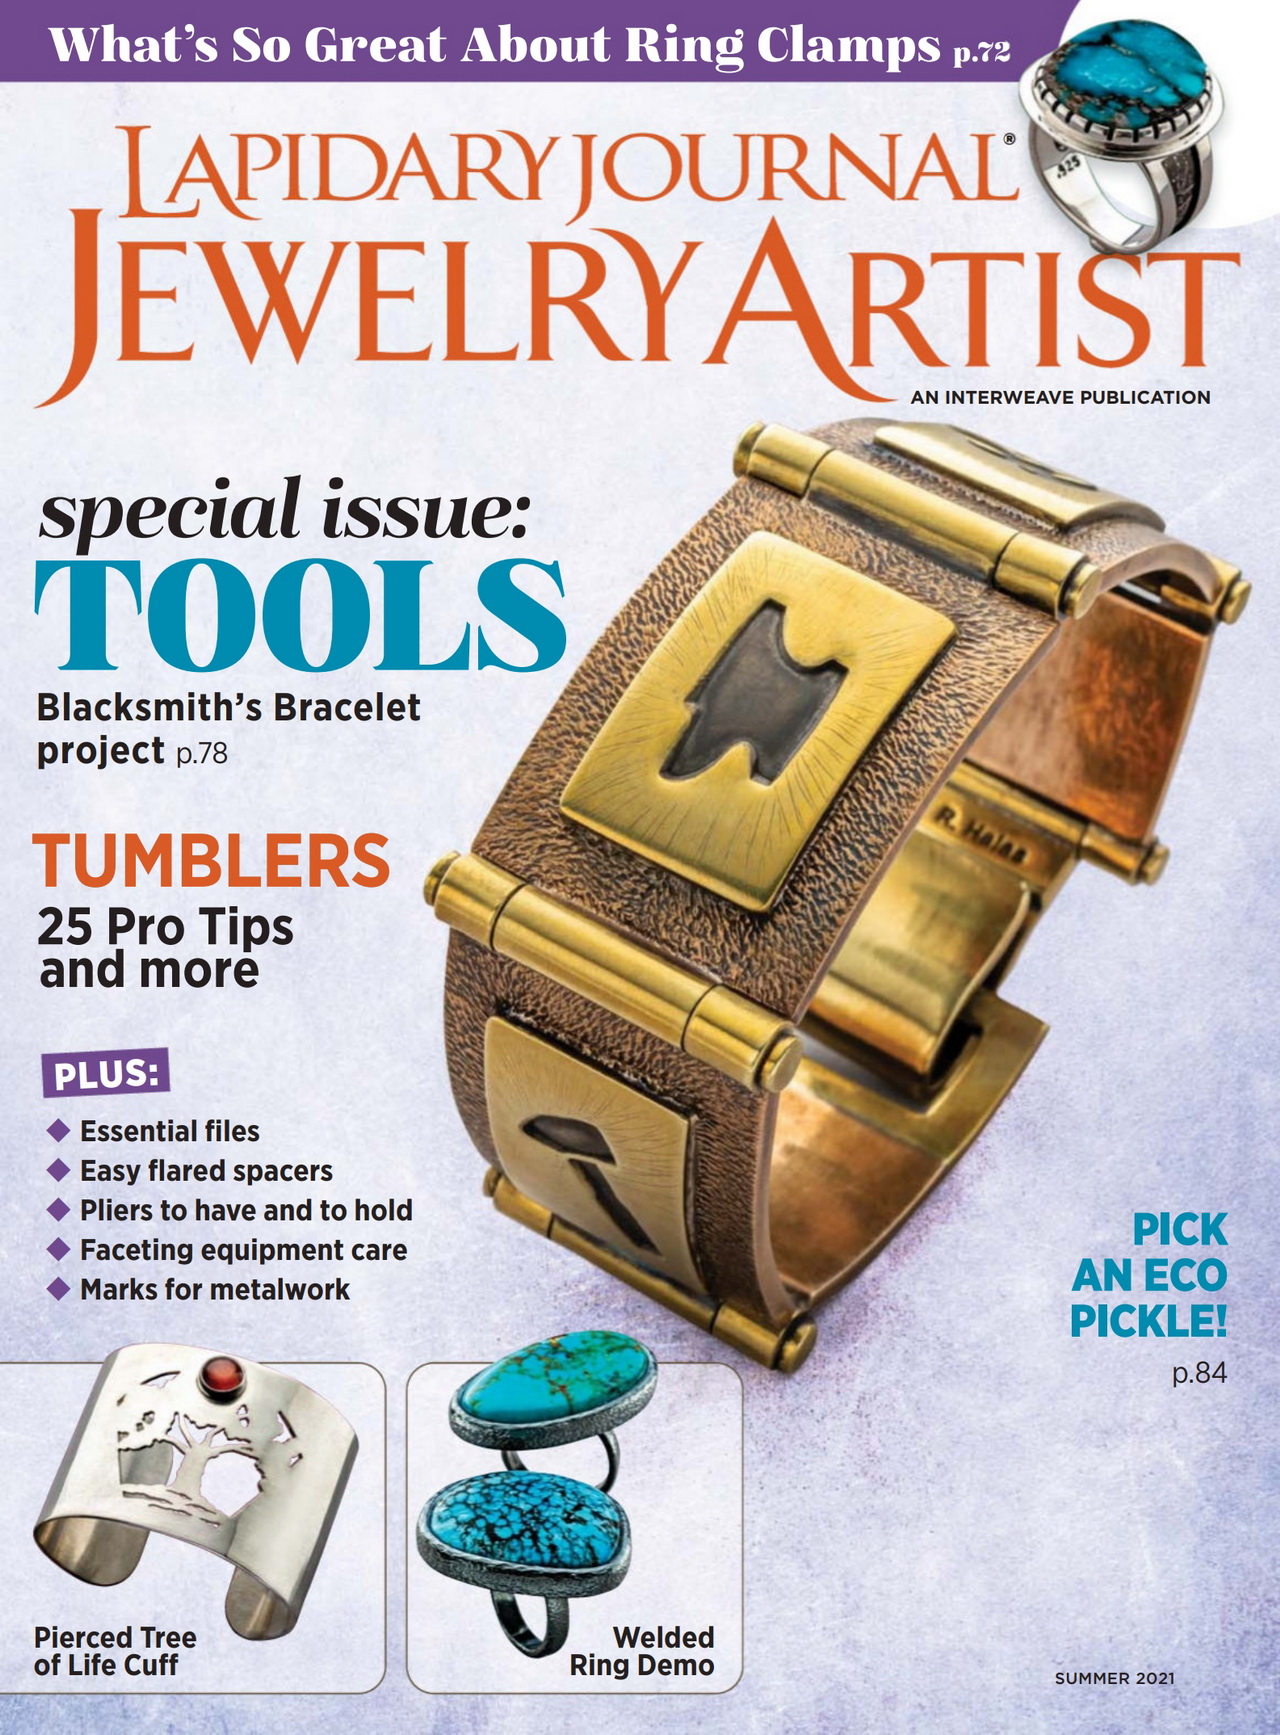 《Lapidary Journal Jewelry Artist》美国版2021年夏季号专业杂志